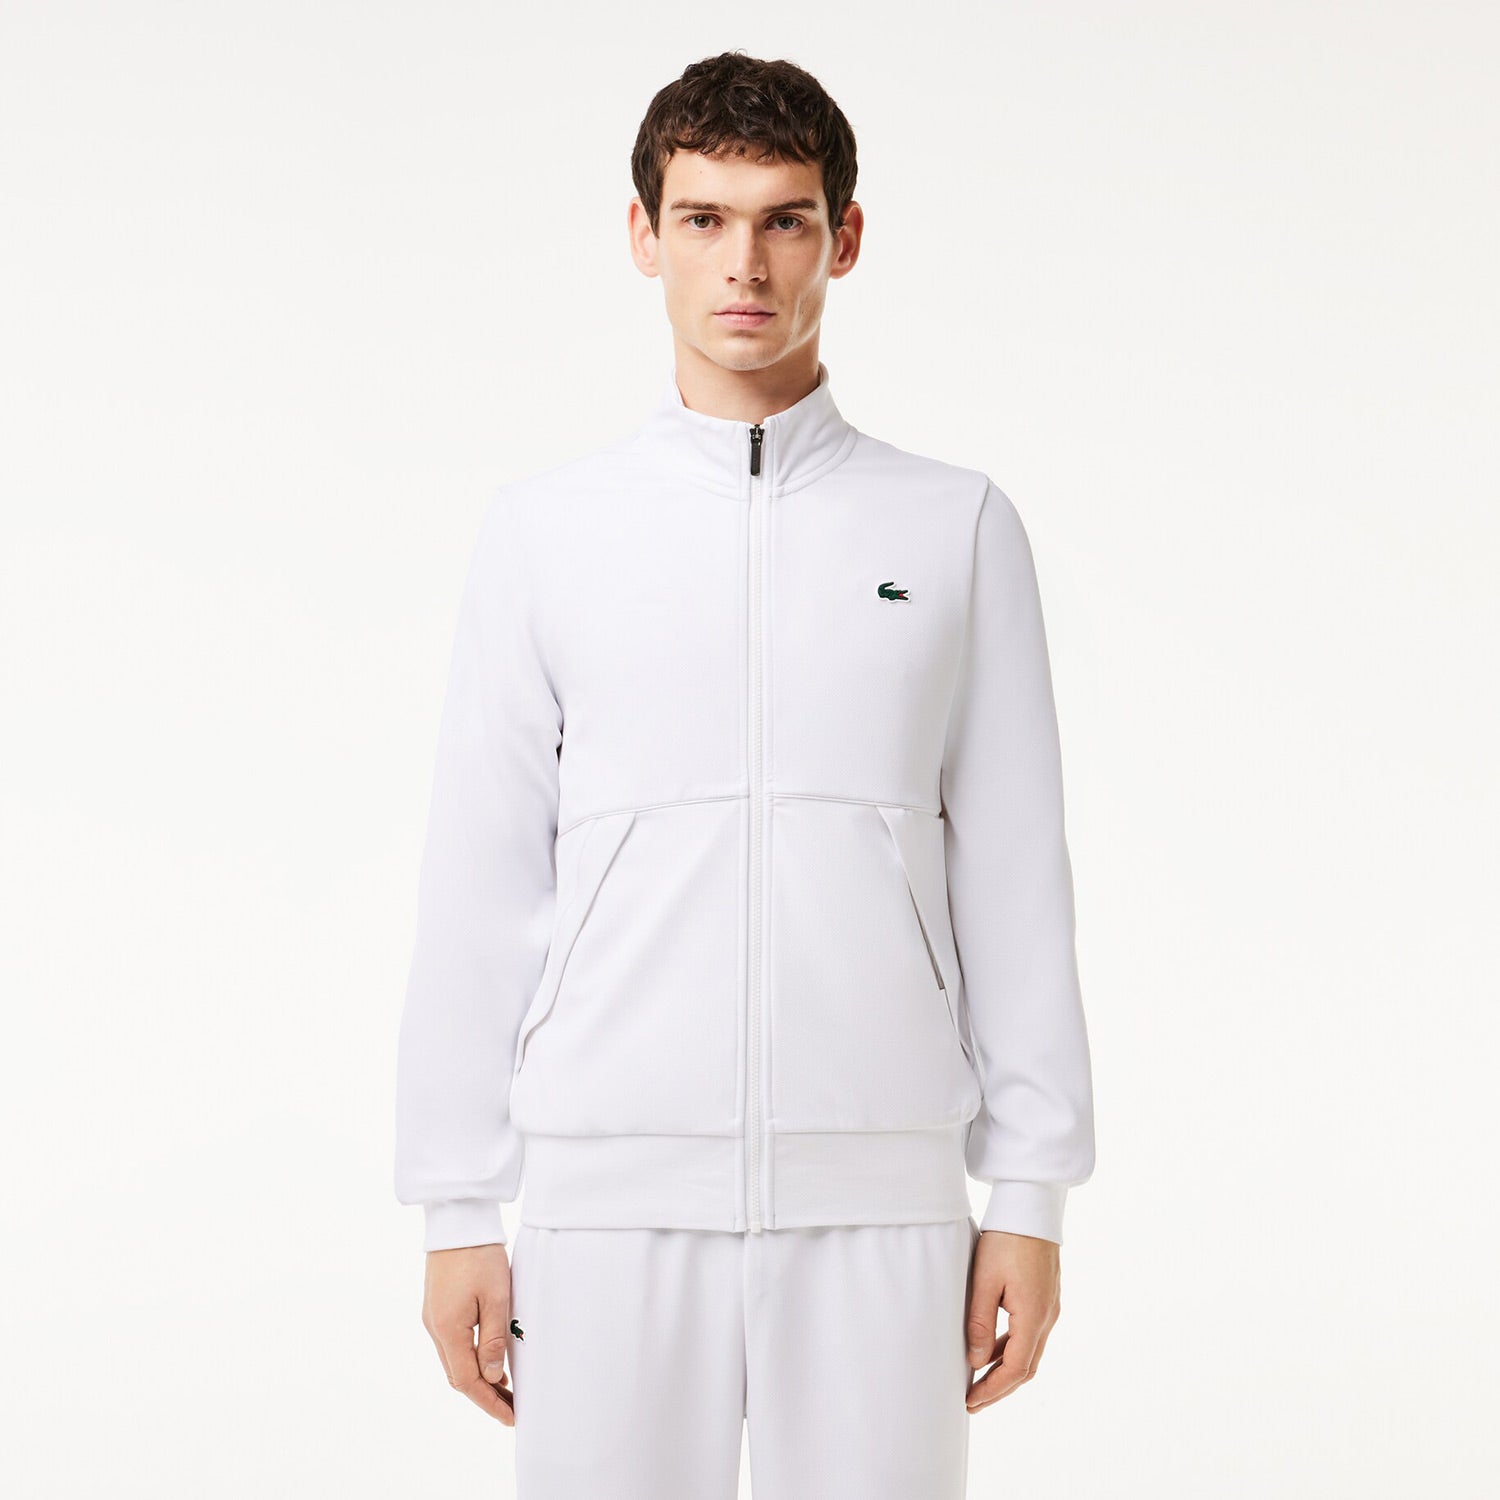 Lacoste Men's Full-Zip Tennis Jacket - White (1)